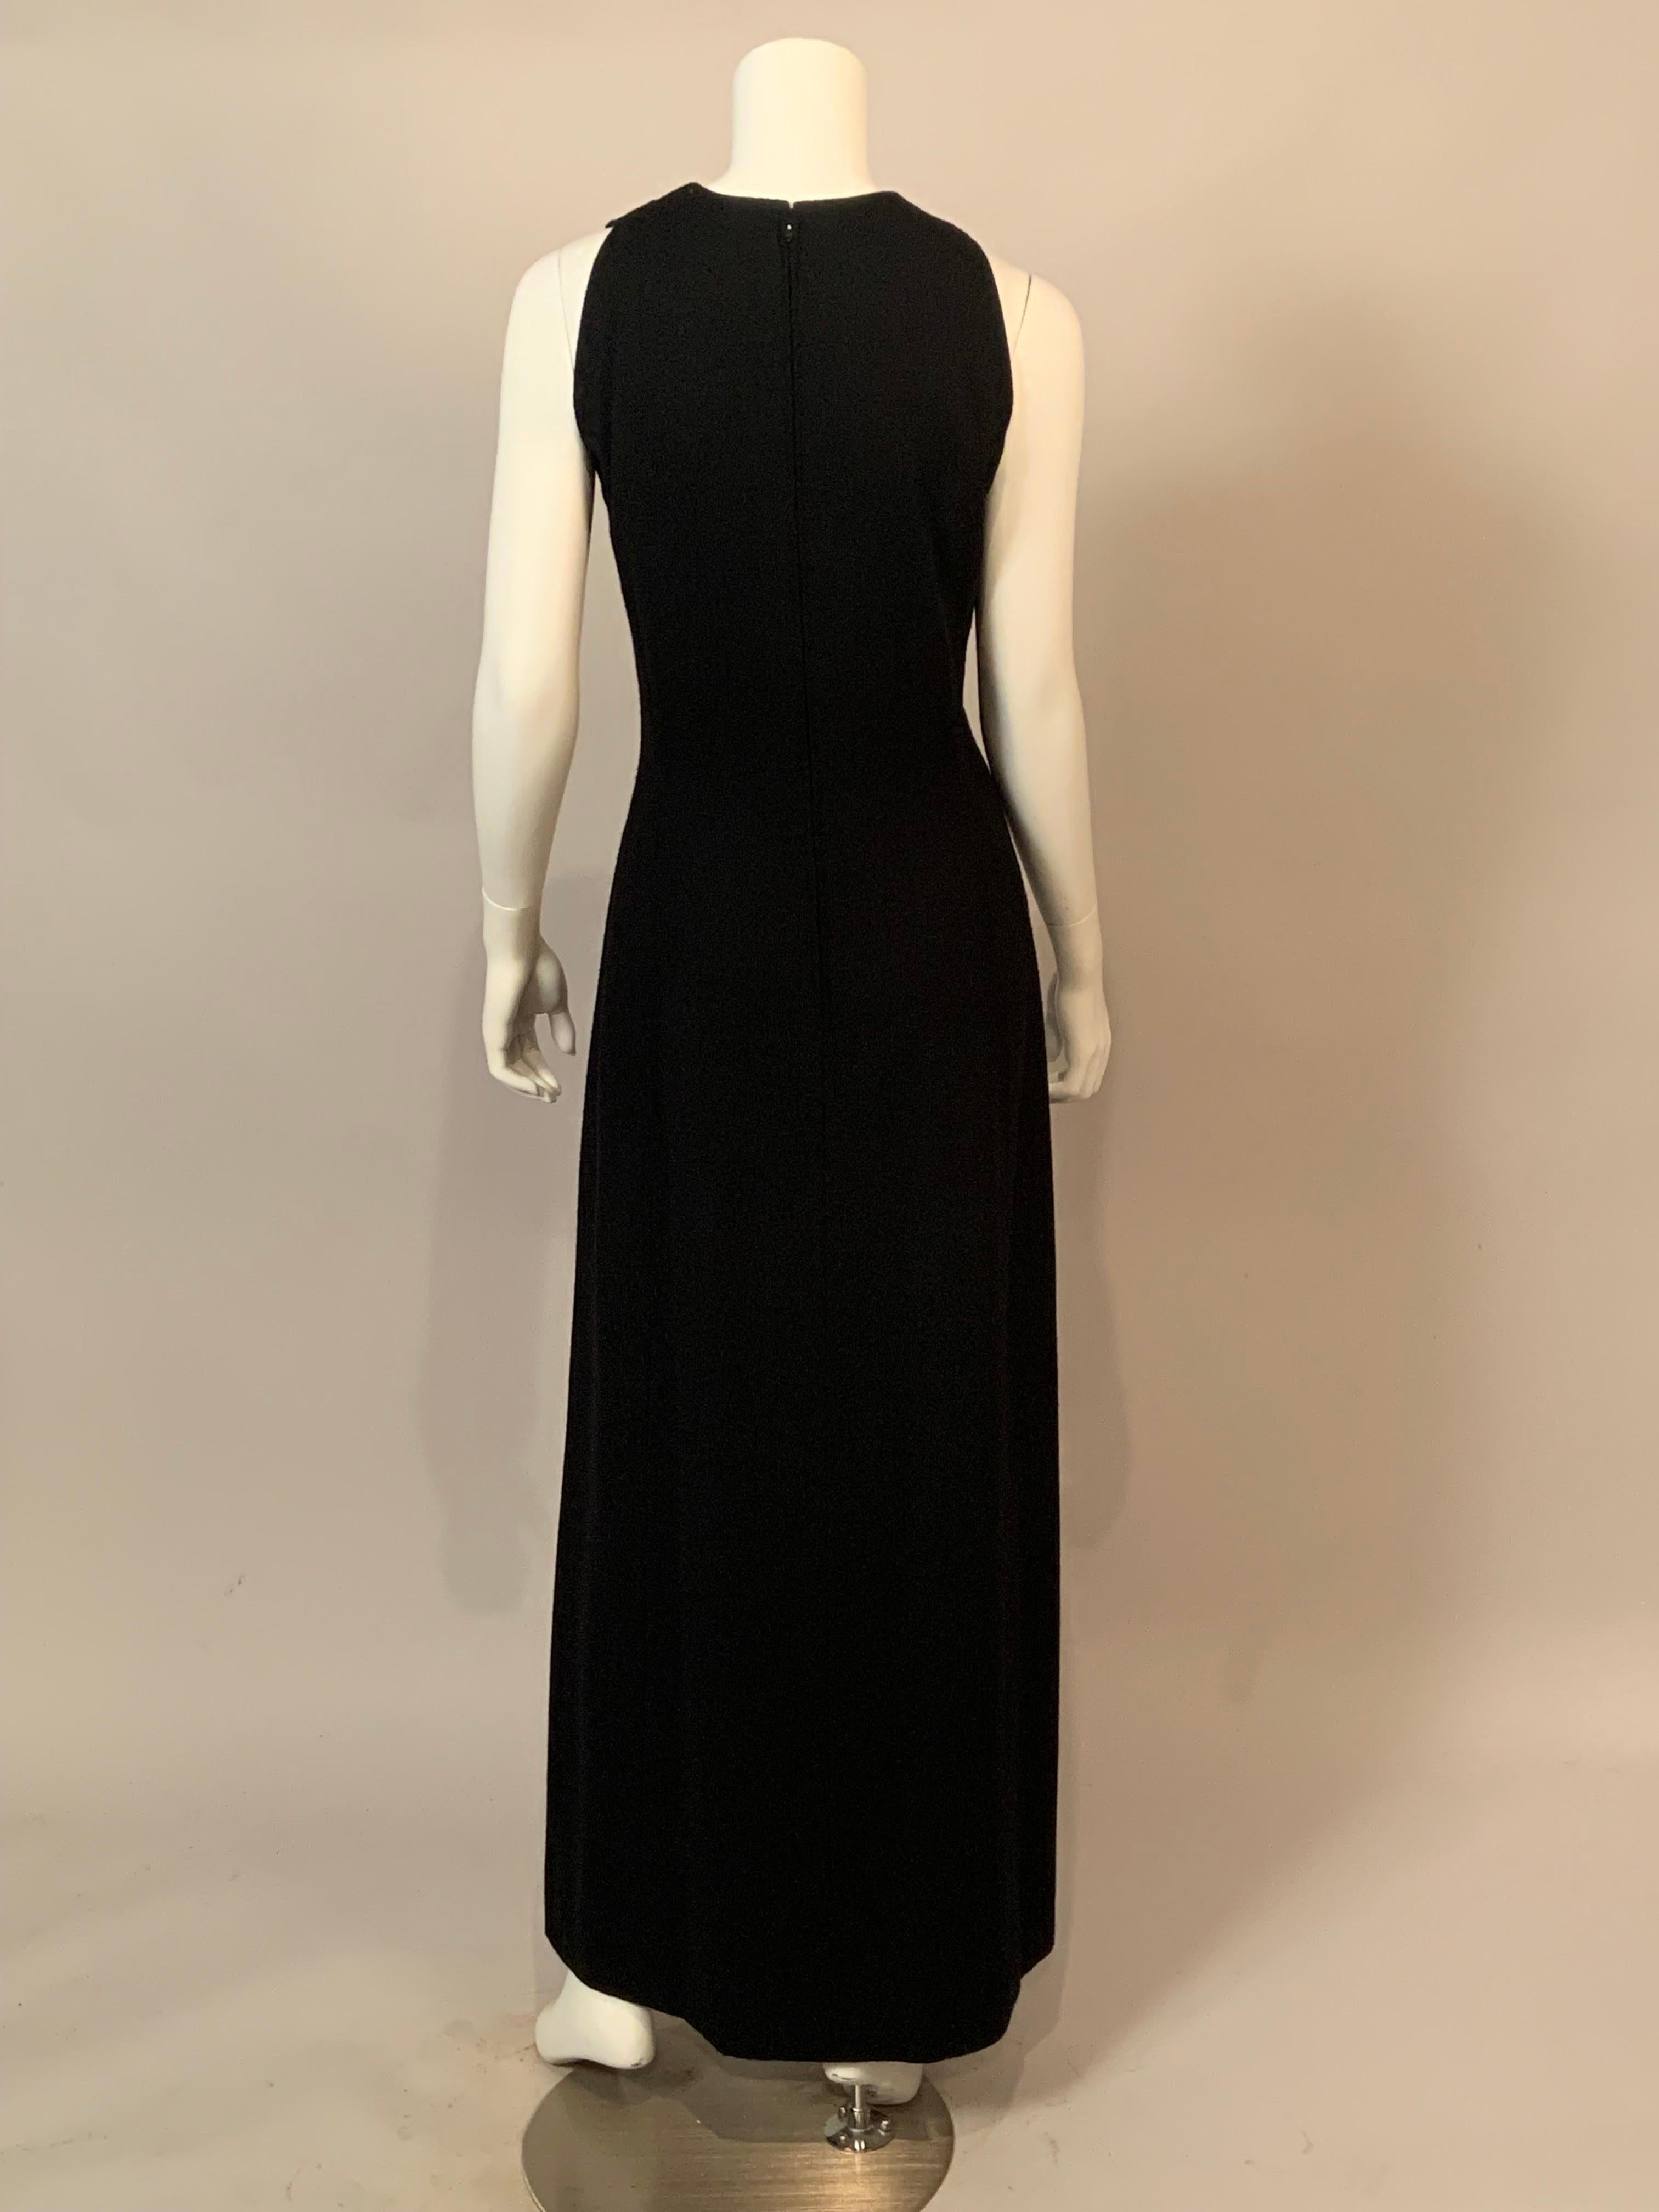 Women's 1970's Pauline Trigere Black Wool Crepe Dress with Low Cut Neckline For Sale